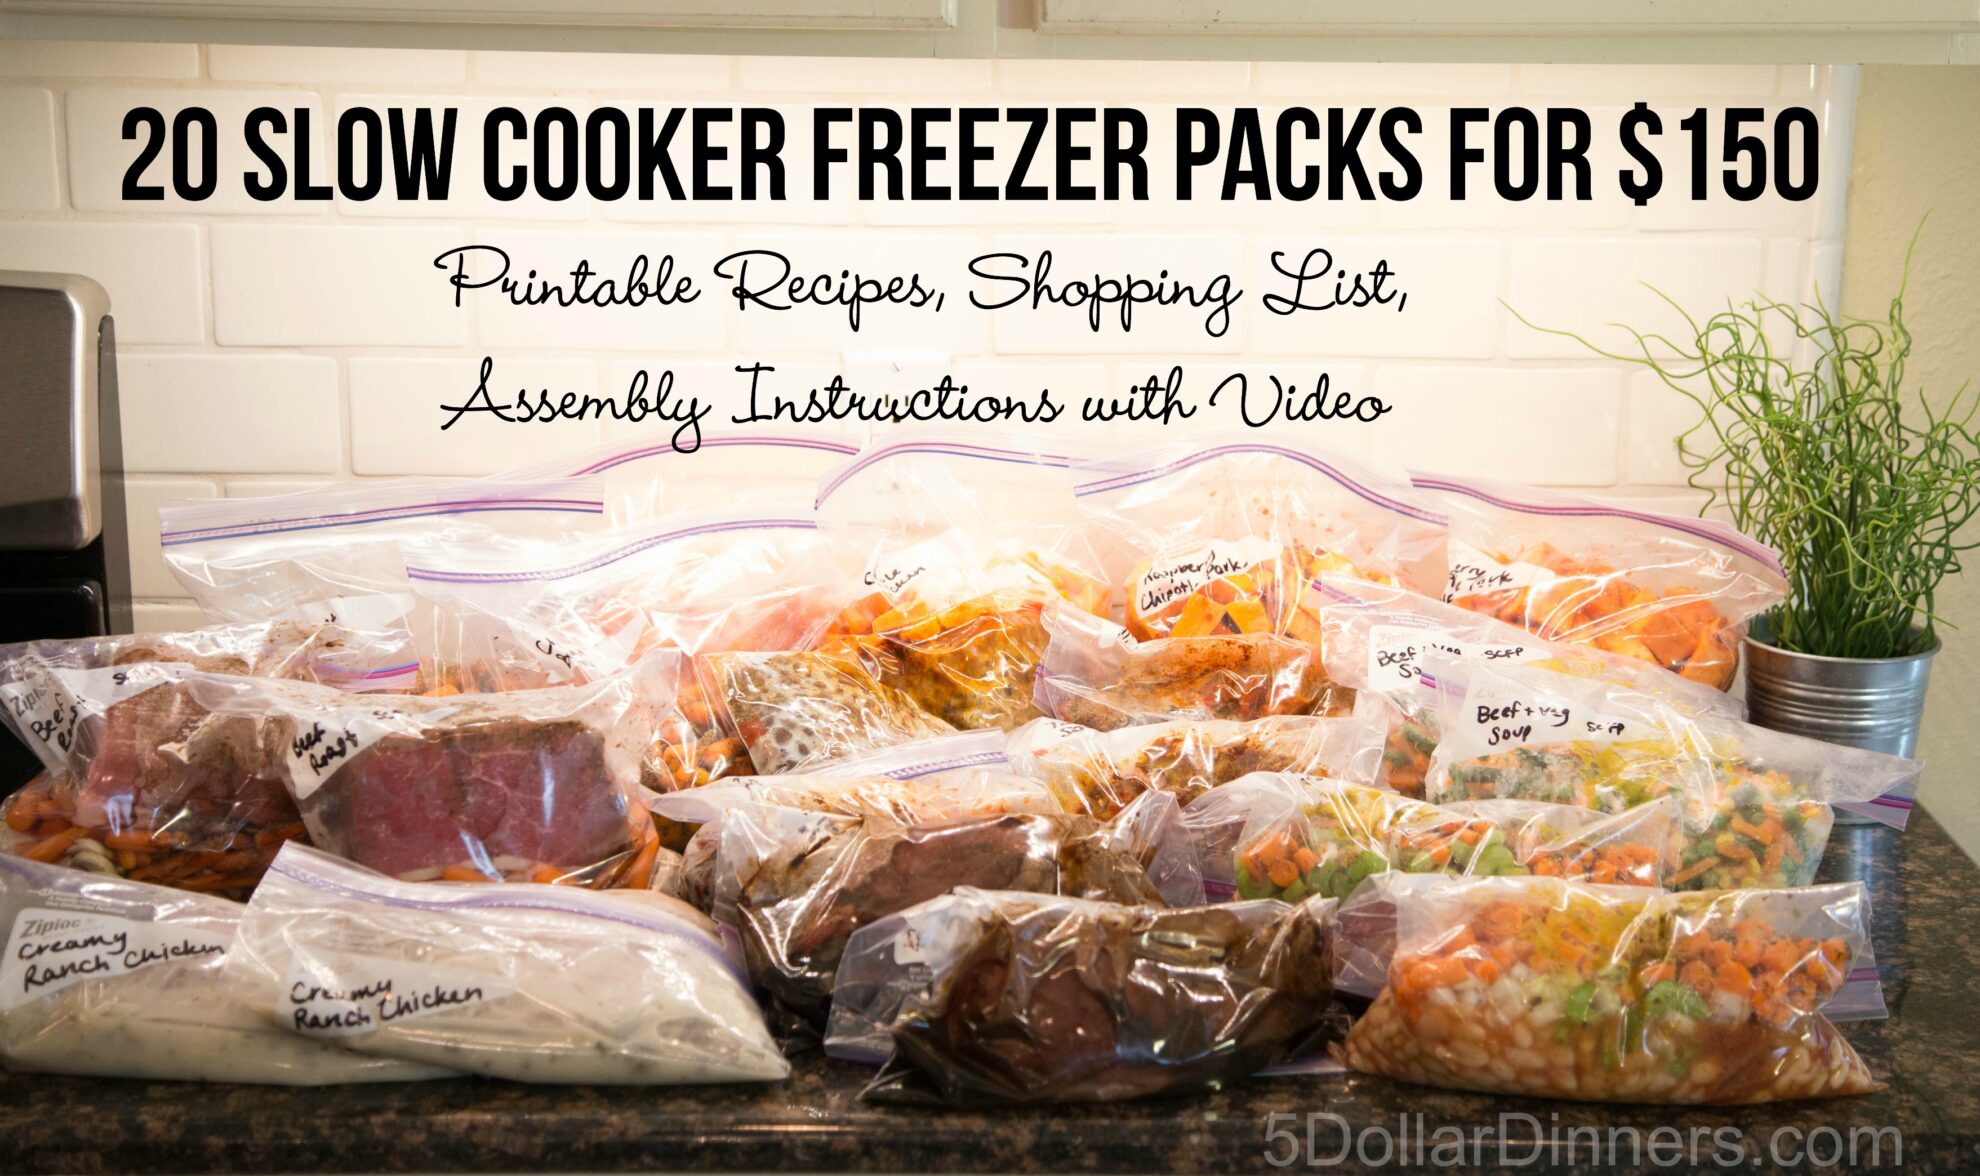 https://www.5dollardinners.com/wp-content/uploads/2015/07/Slow-Cooker-Freezer-Pack-2nd-Edition-Meal-Plan.jpg